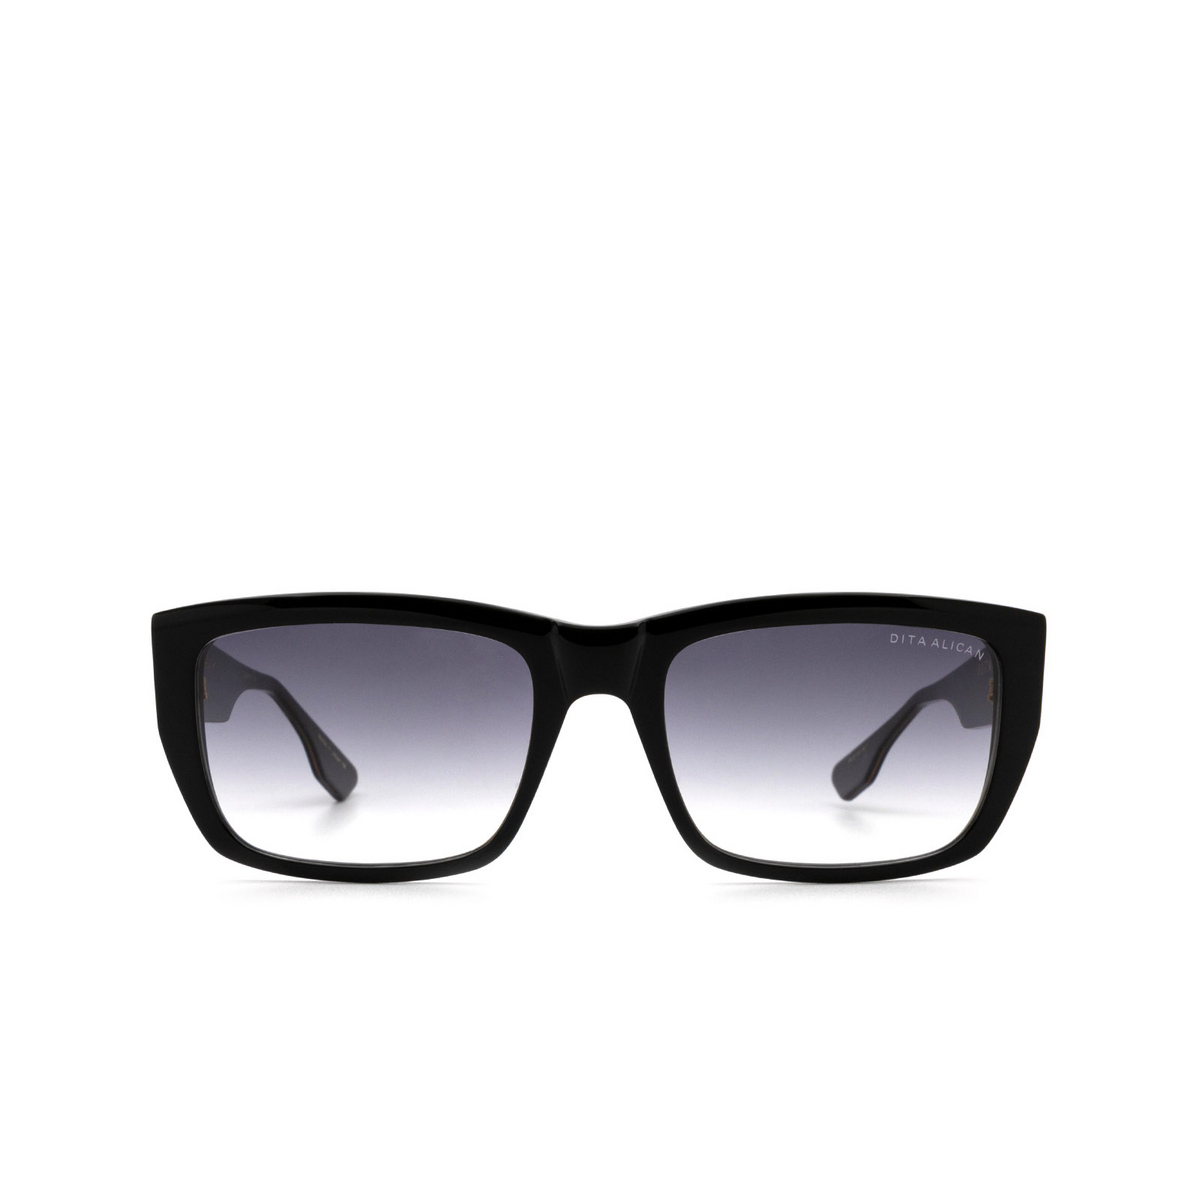 Dita® Rectangle Sunglasses: Alican DTS404-A-01 color Black Blk - front view.